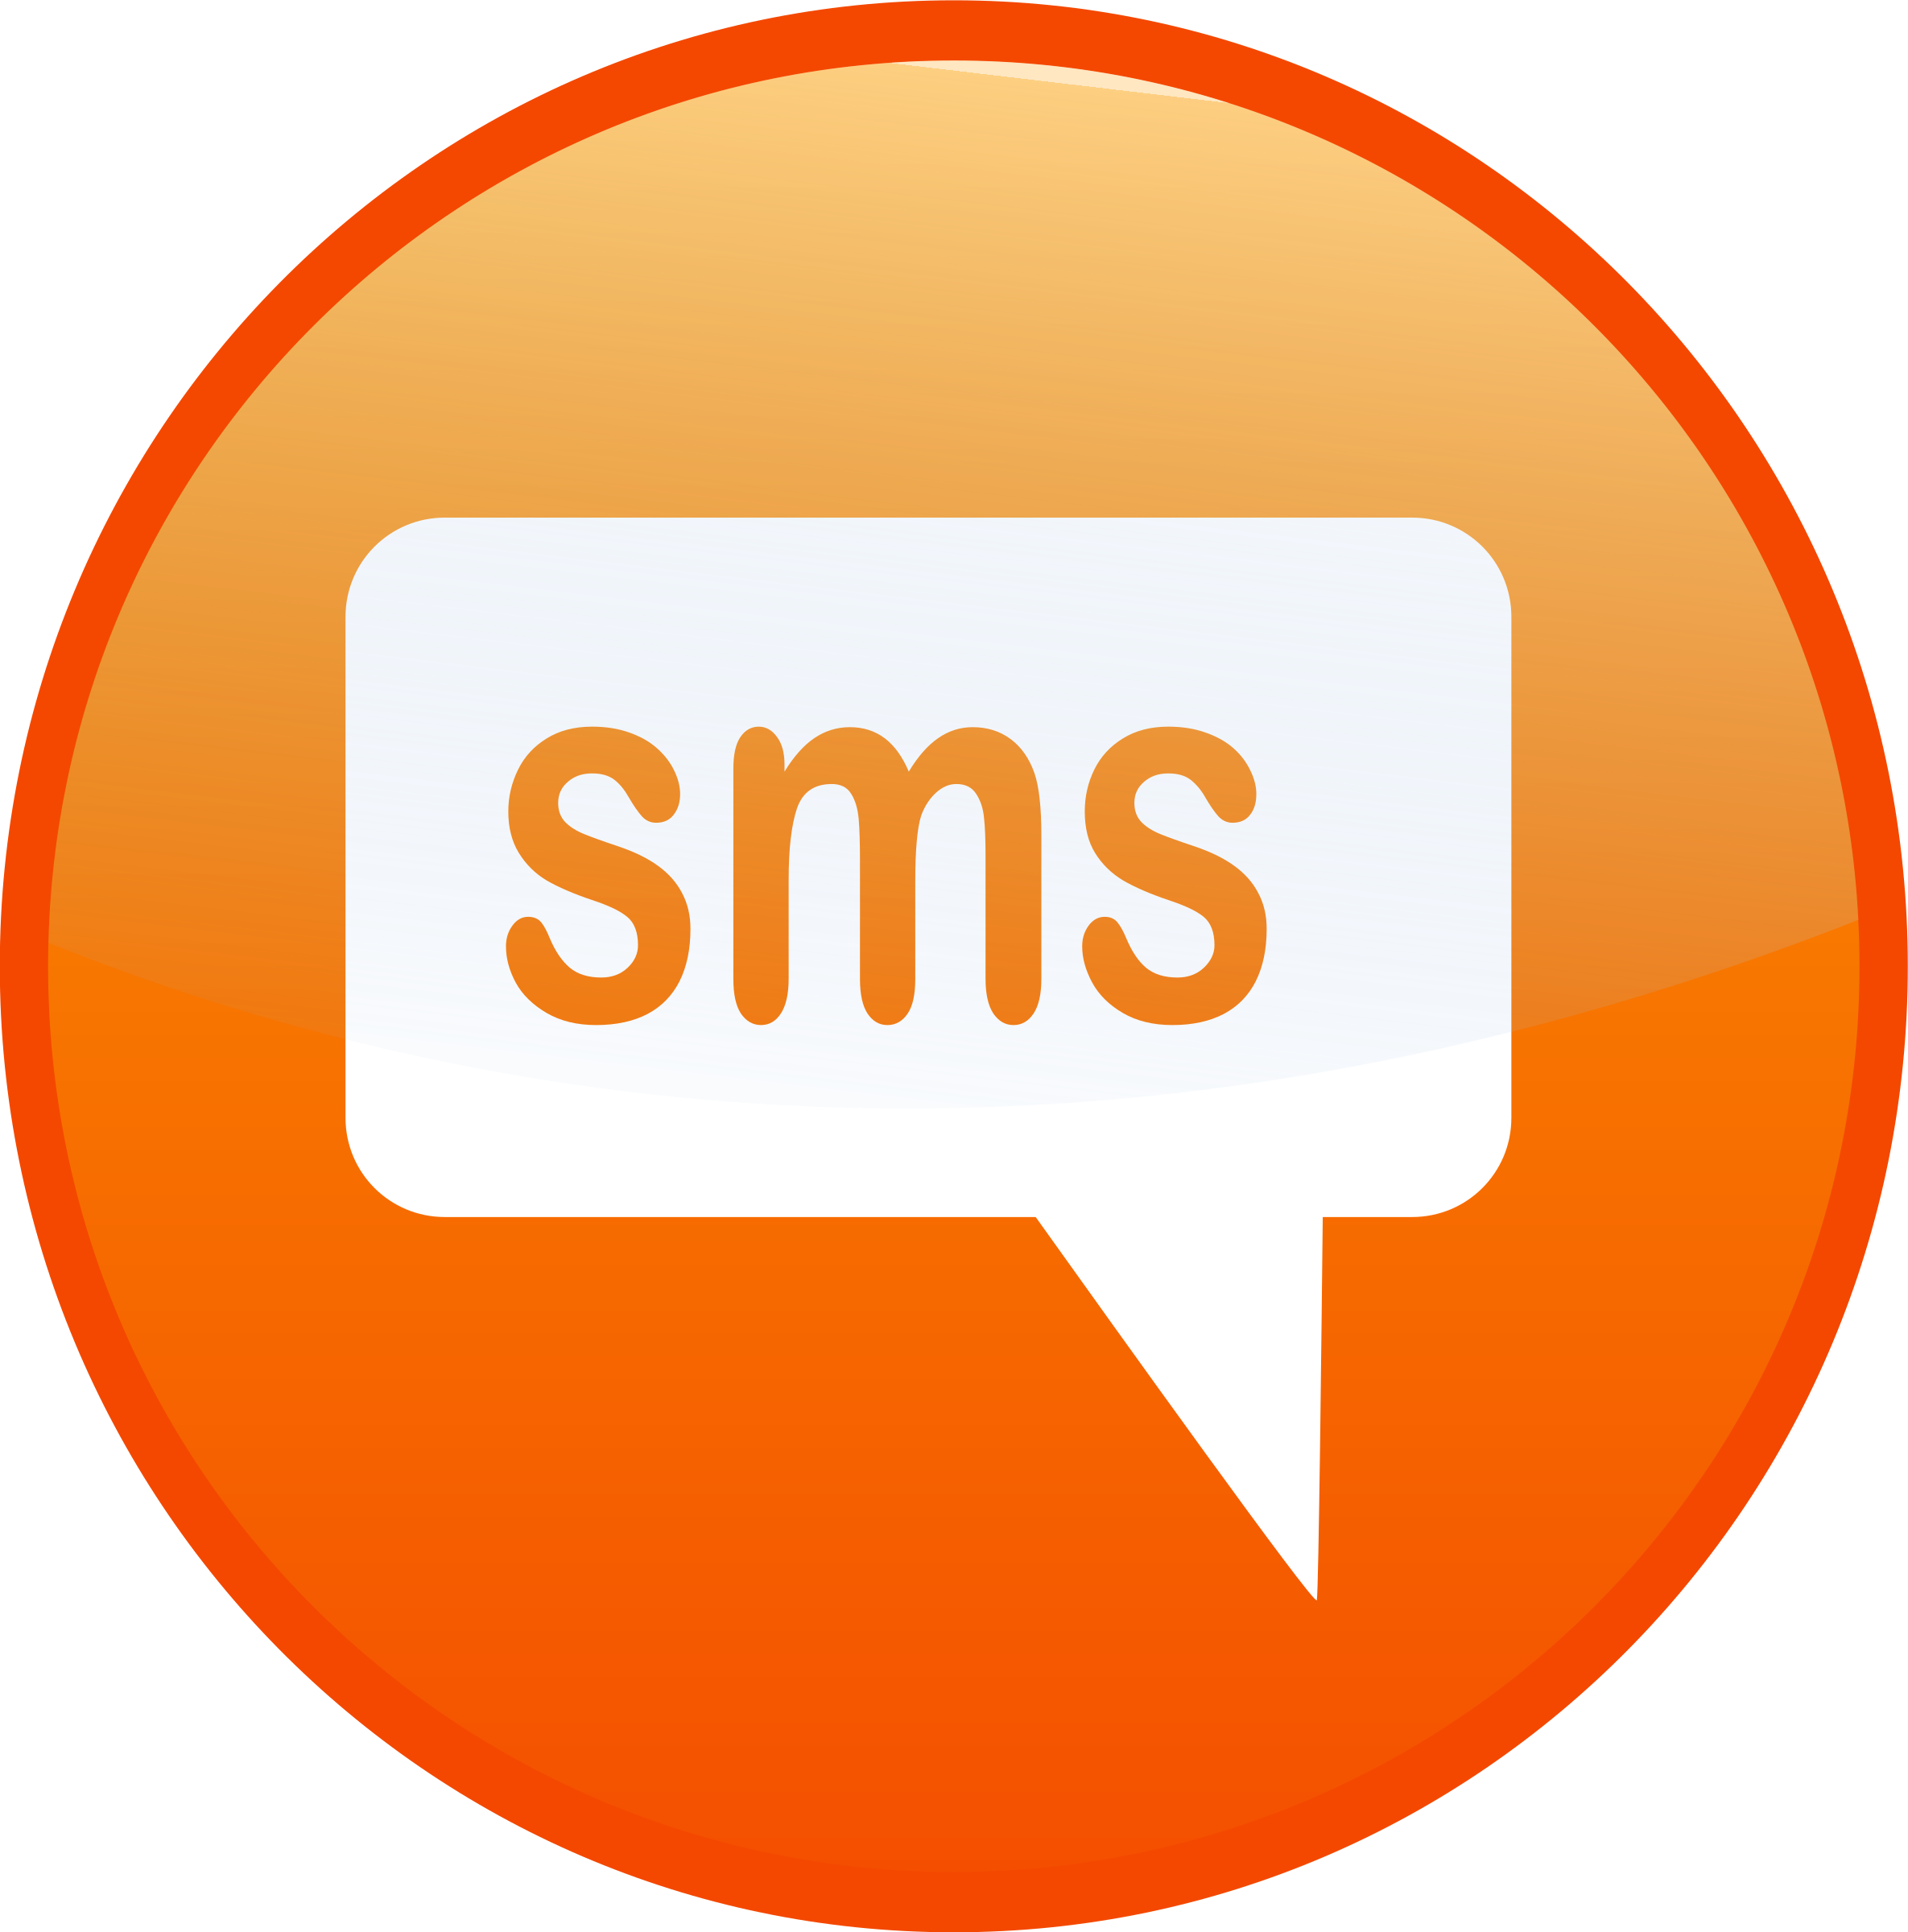 Sms text. Смс. Иконка SMS. Значок SMS сообщения. Смс картинки.